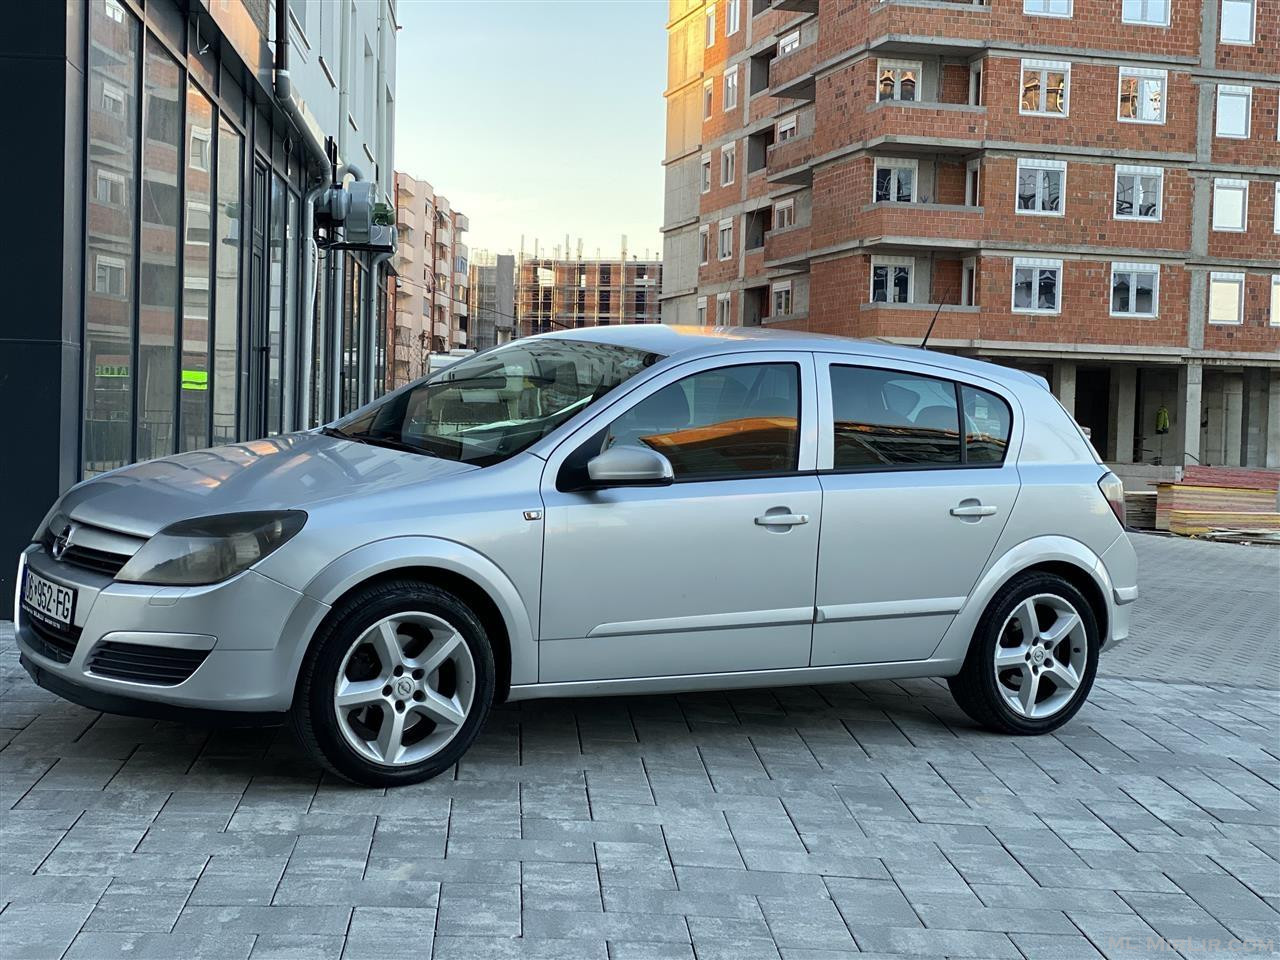 Opel Astra H 1.9 Disel rks